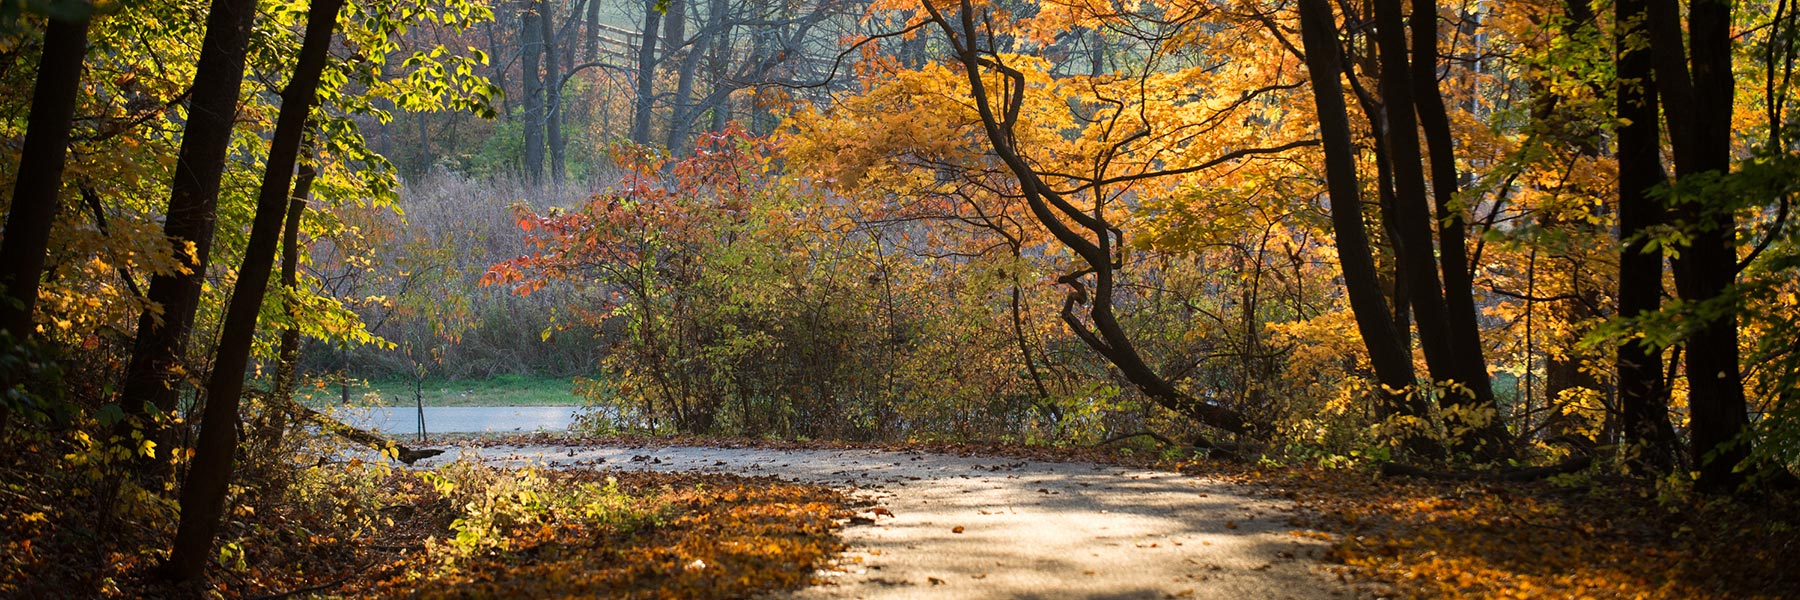 Path in the woods in fall season